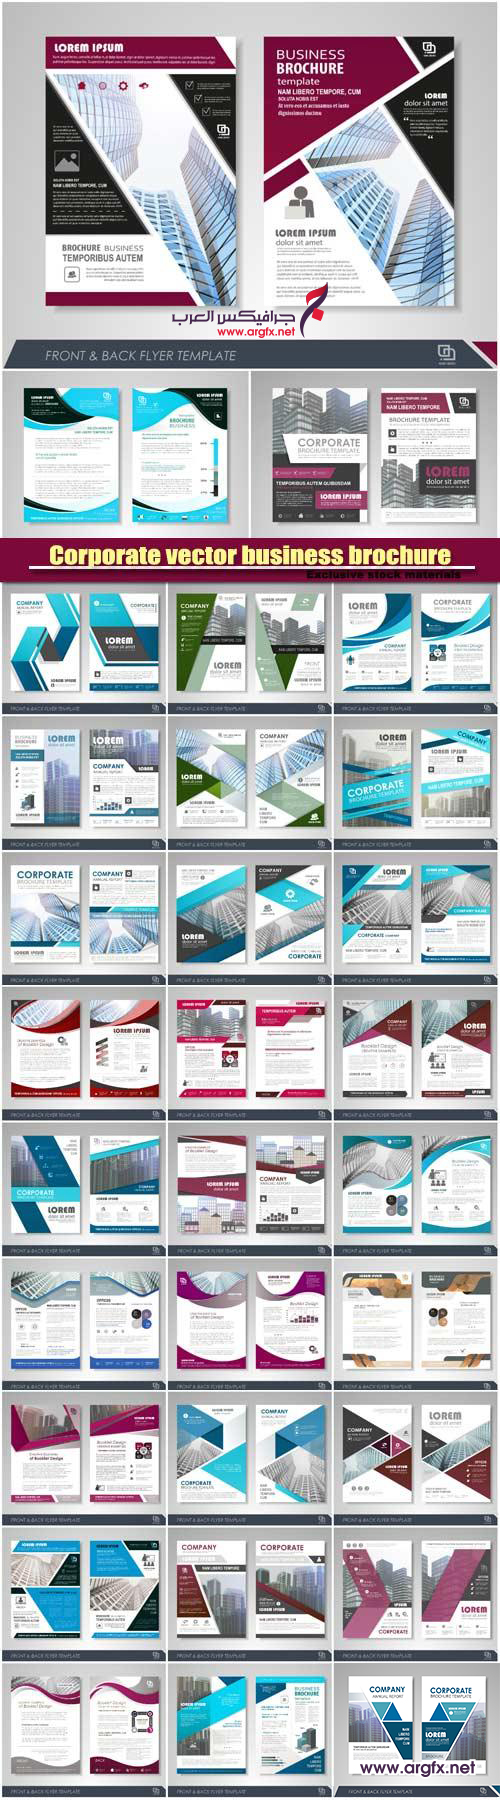 Corporate vector business brochure, flyer design layout